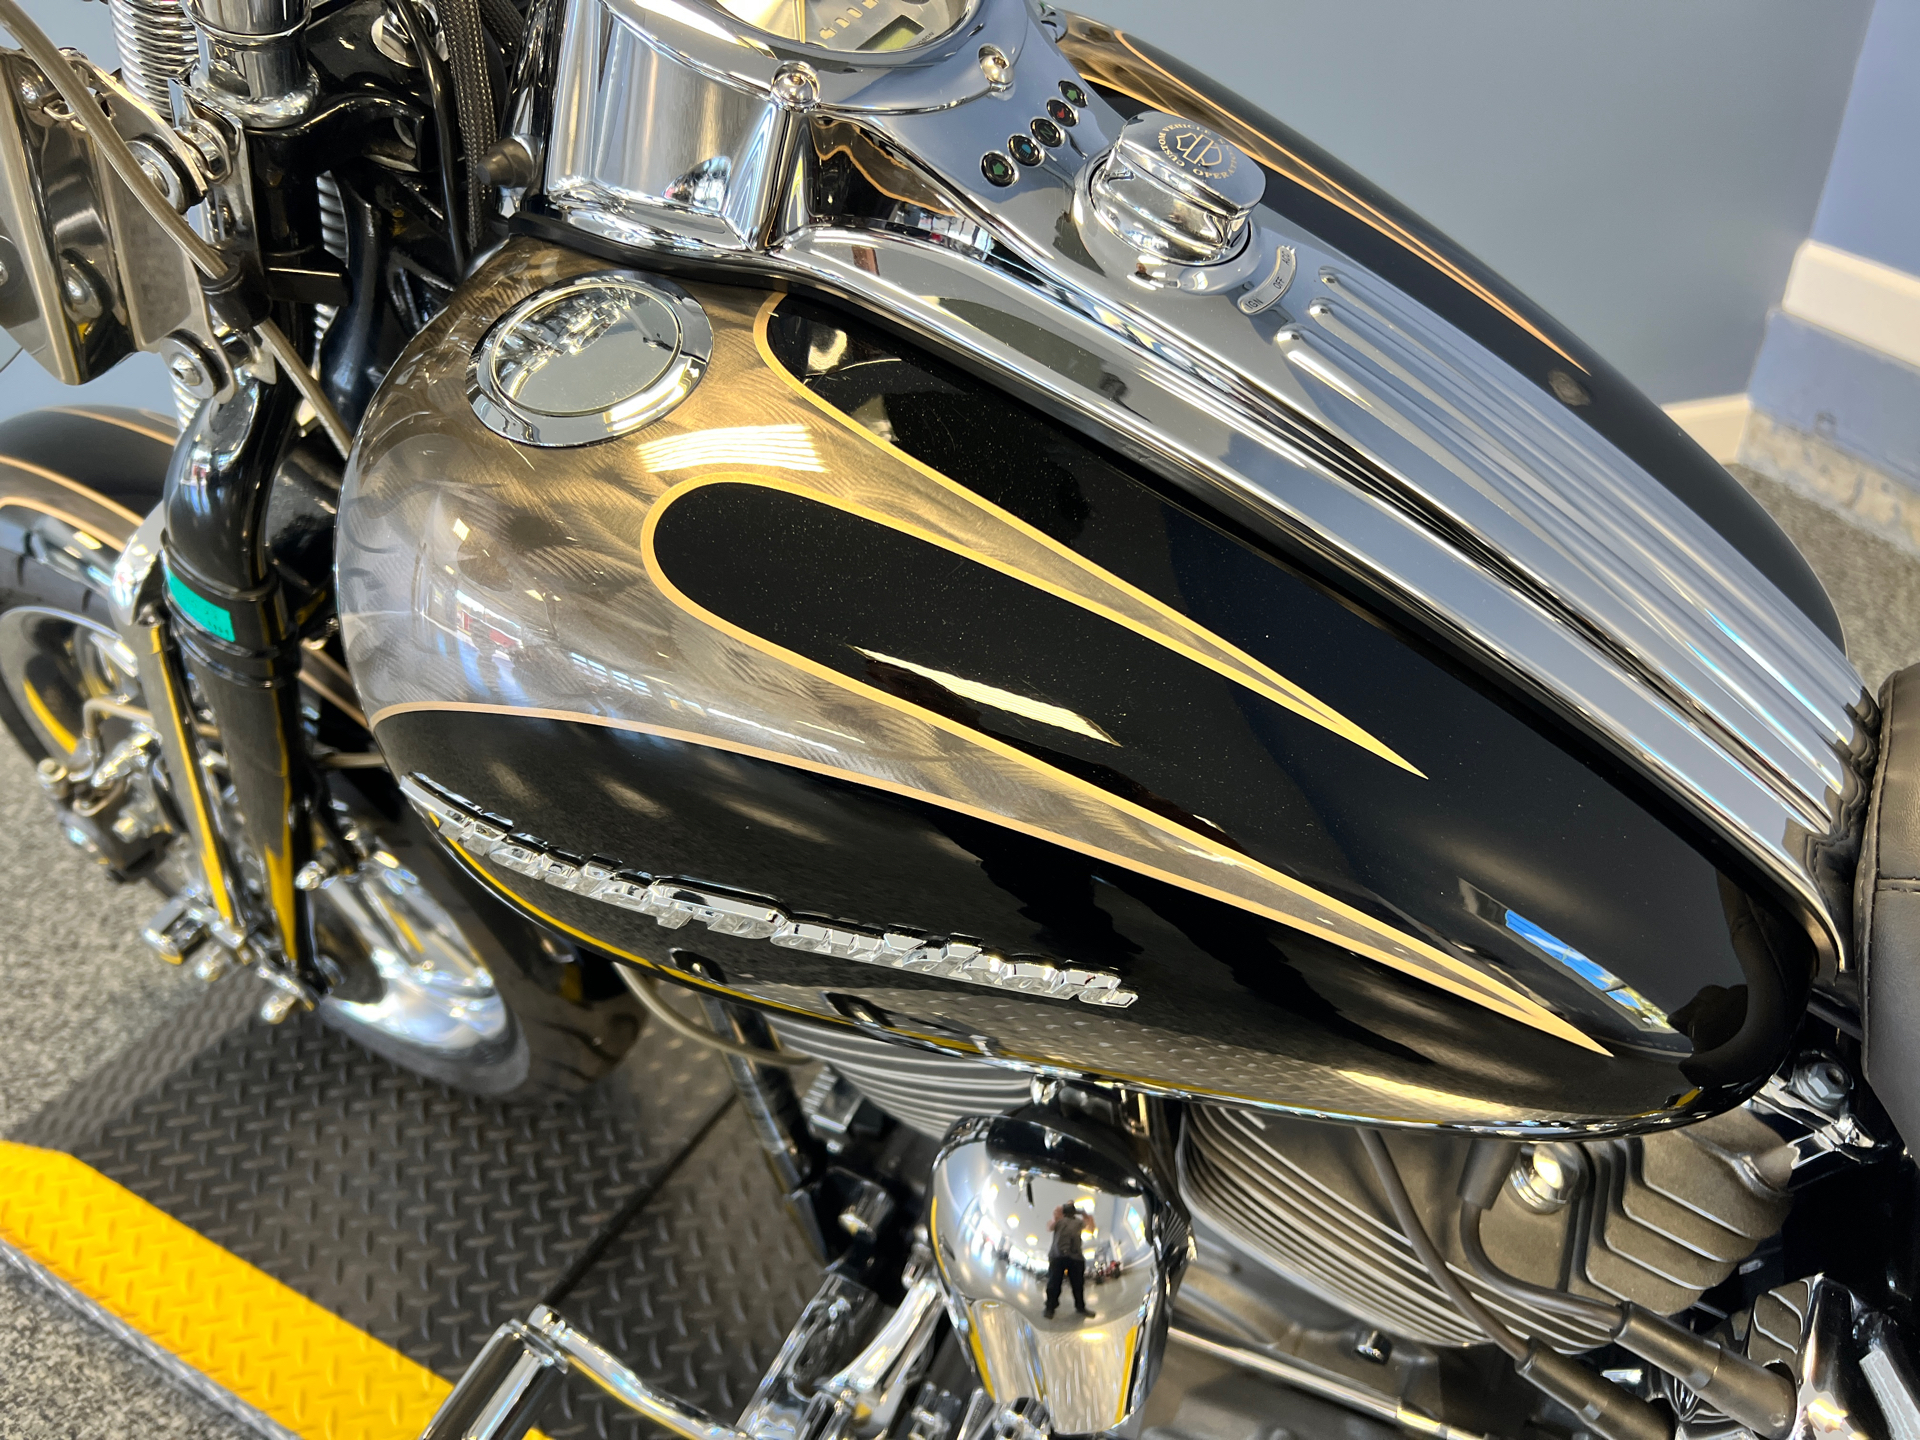 2008 Harley-Davidson CVO™ Screamin' Eagle® Softail® Springer® in Meredith, New Hampshire - Photo 10